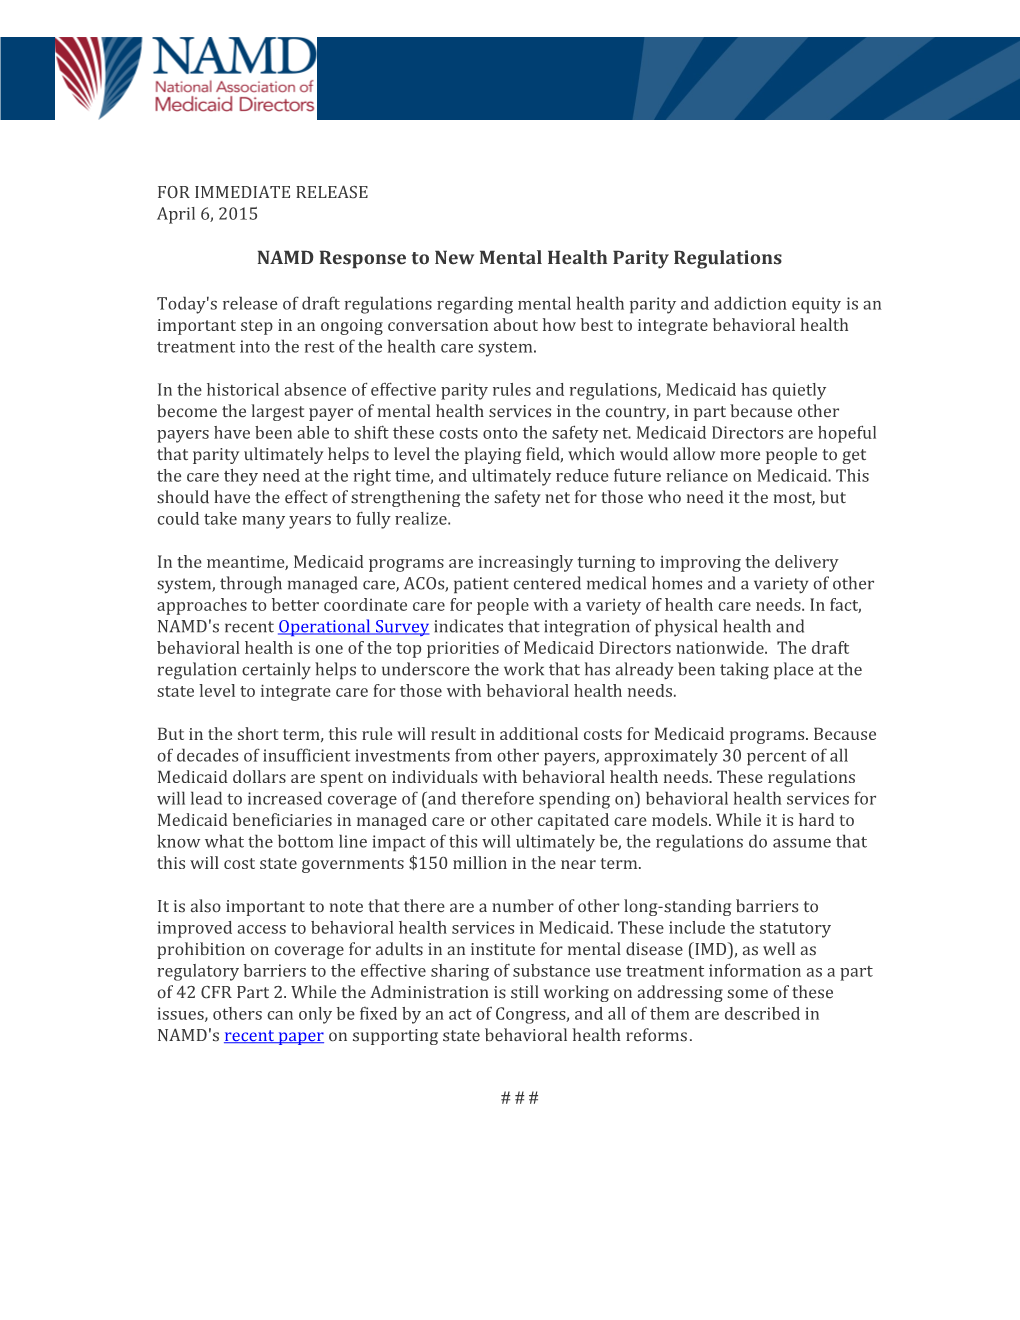 NAMD Response to New Mental Health Parity Regulations